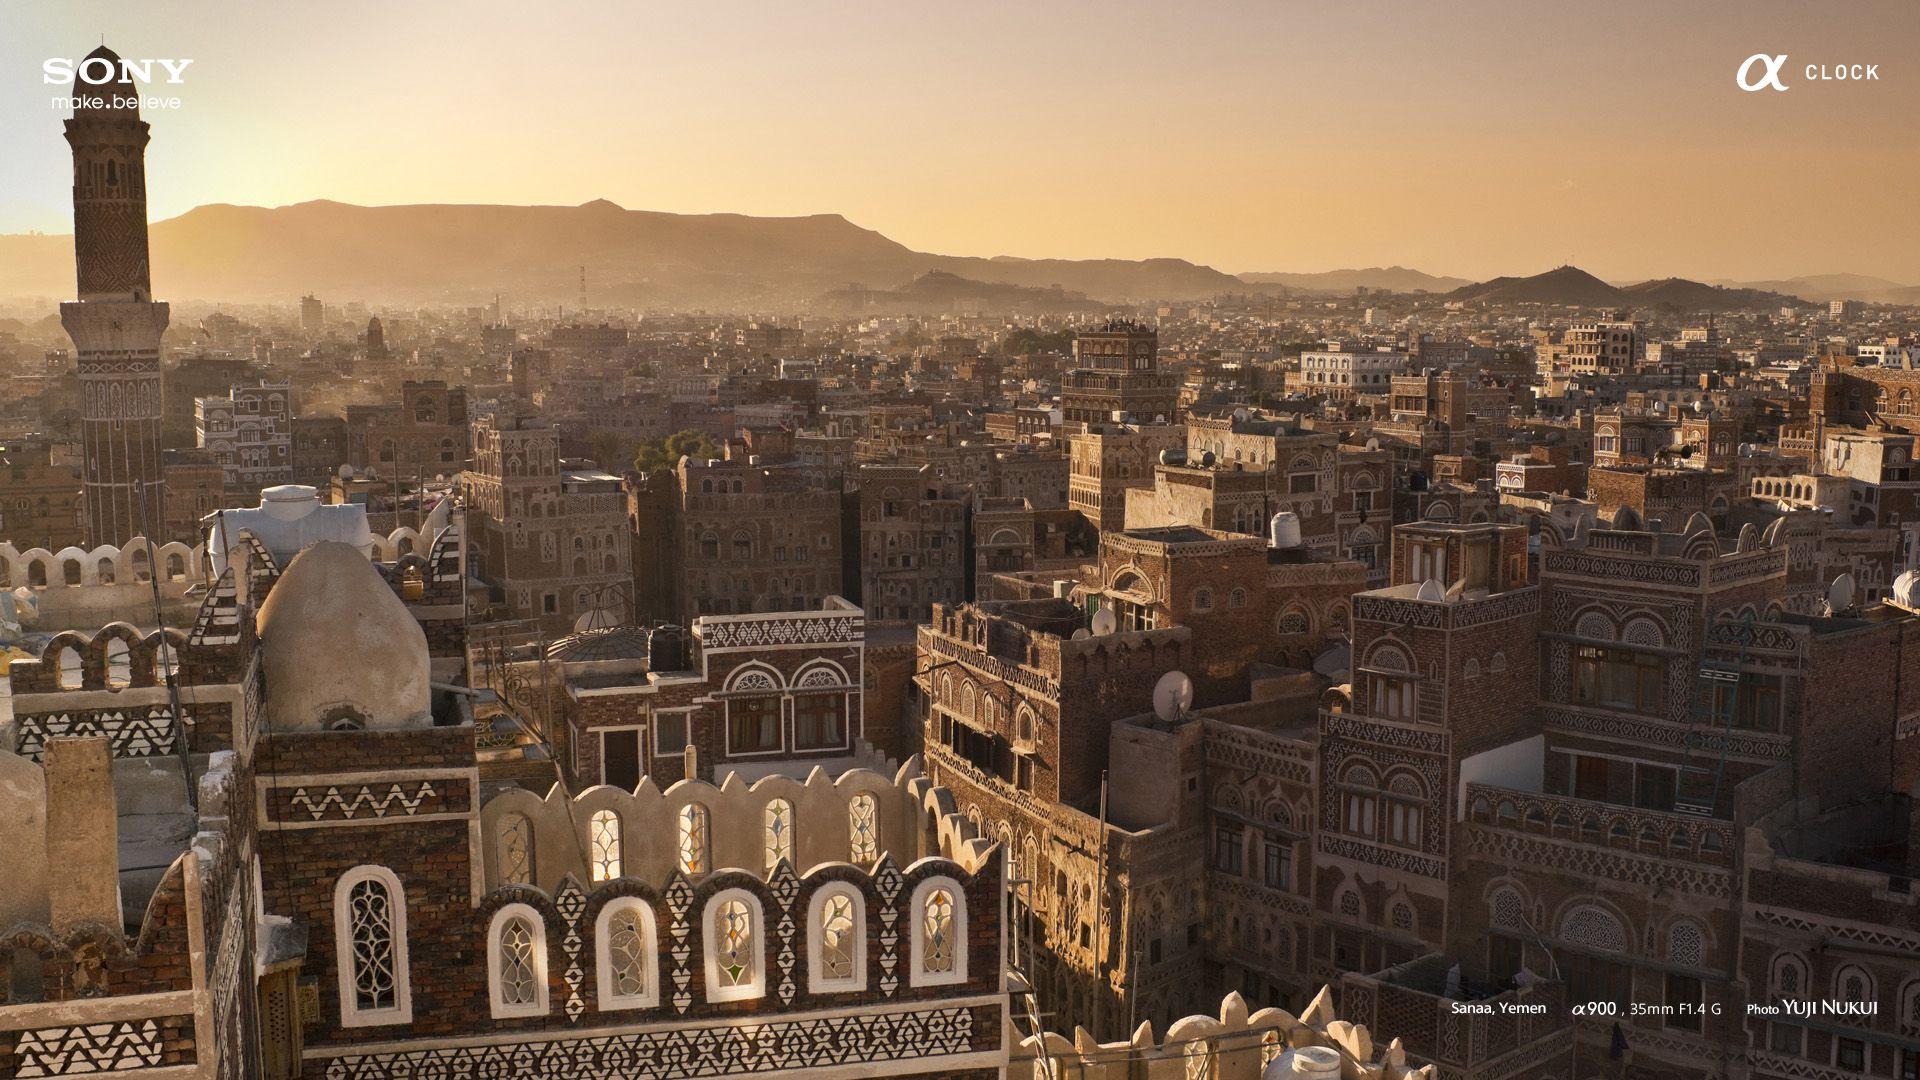 Sanaa, Yemen. XPERIA Z WALLPAPERS